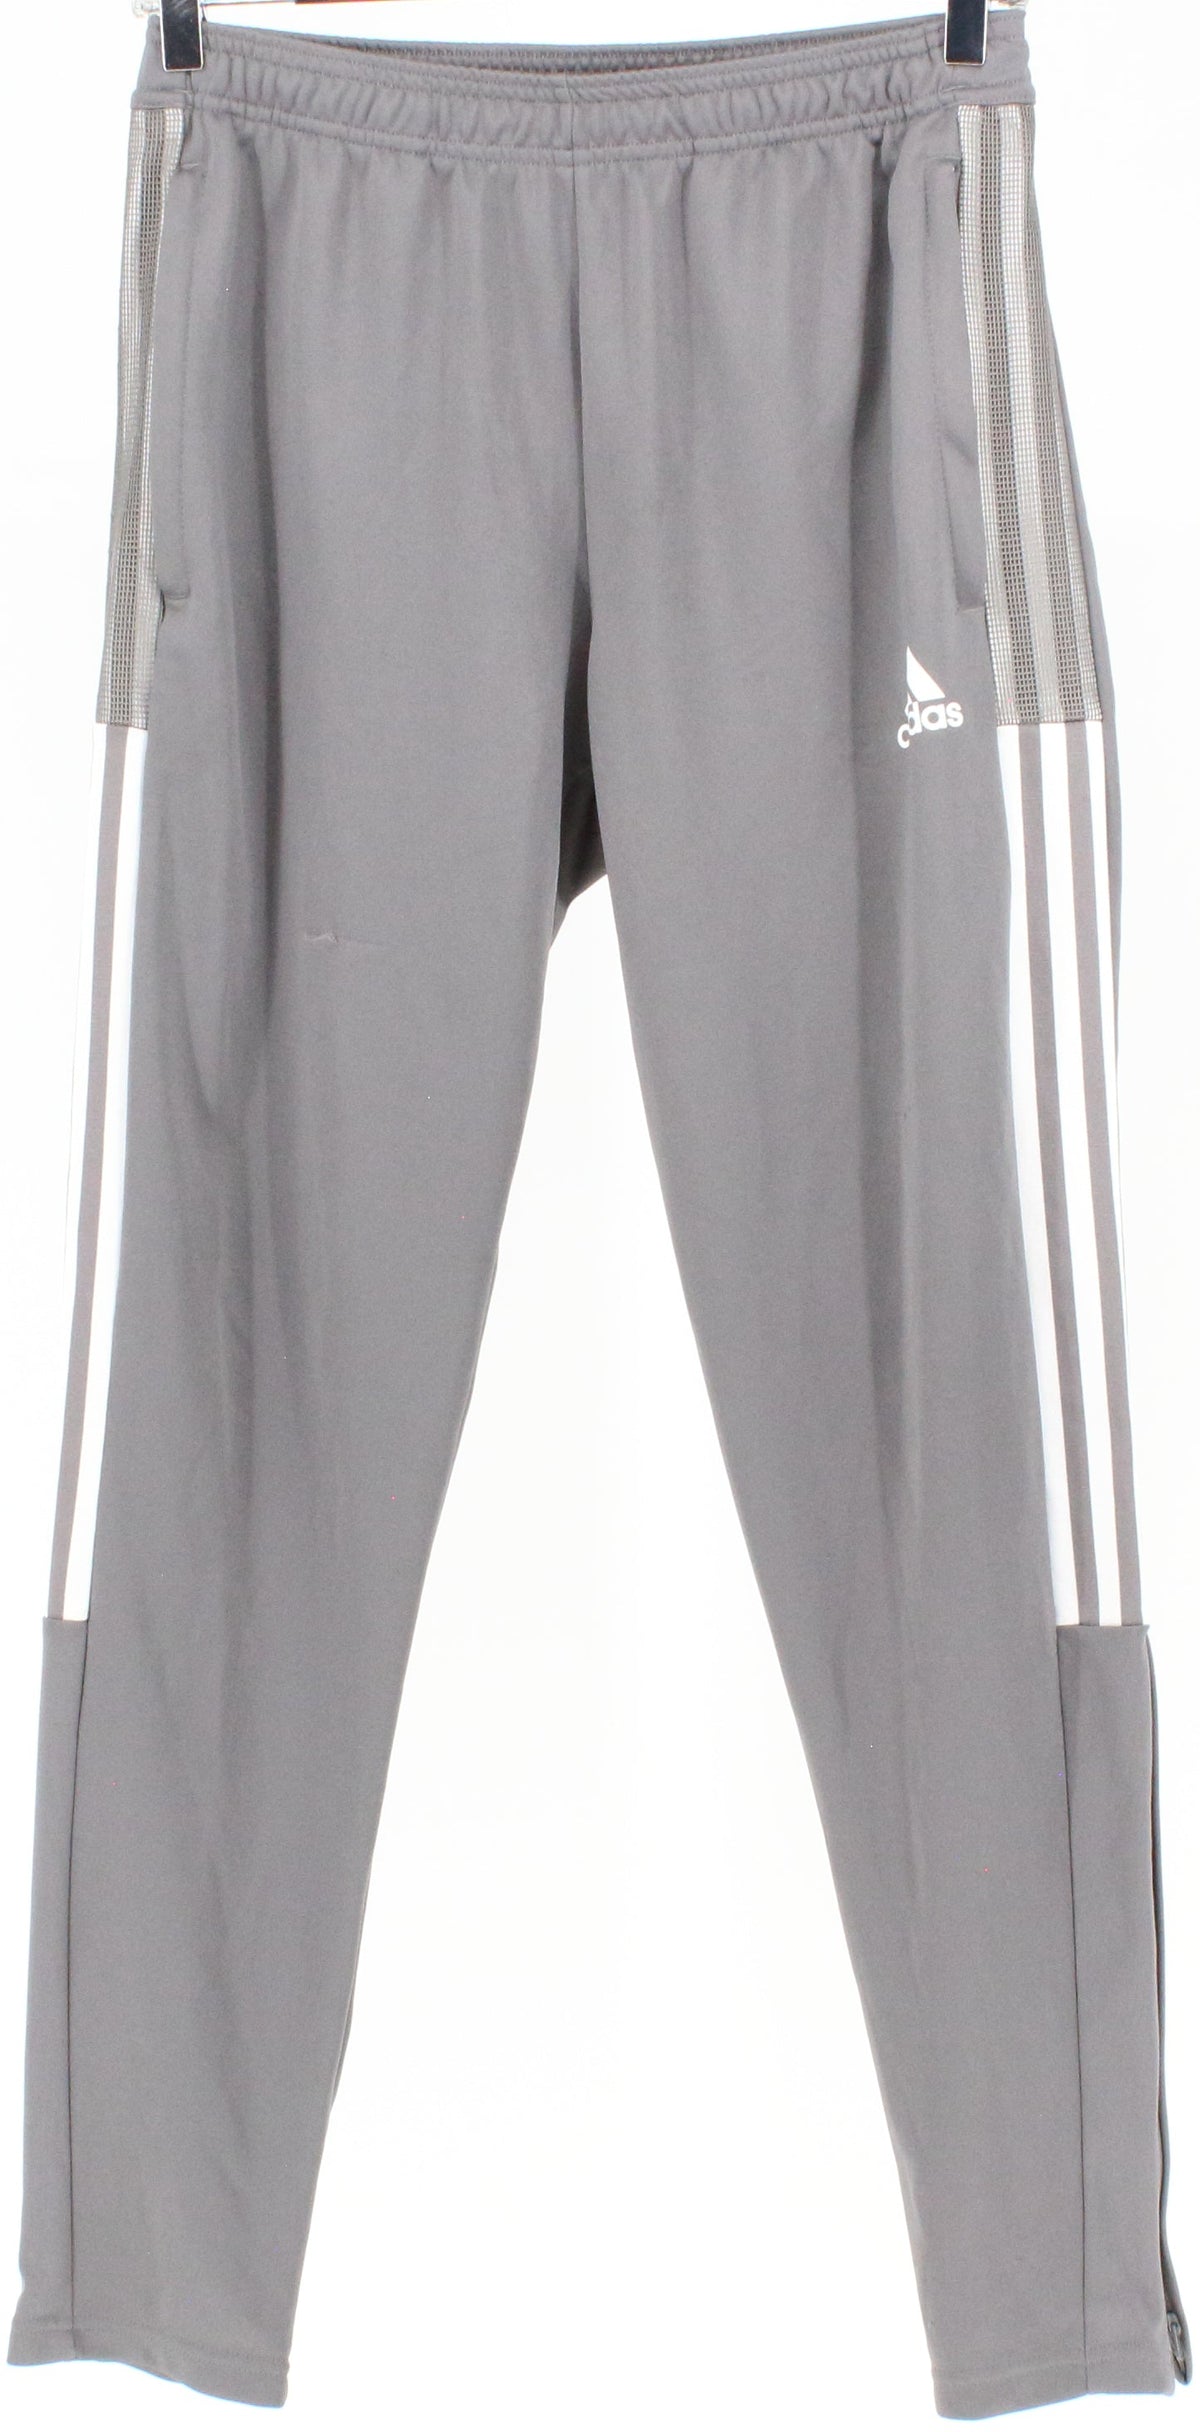 Adidas Aeroready Primegreen Grey and White Women's Active Pants